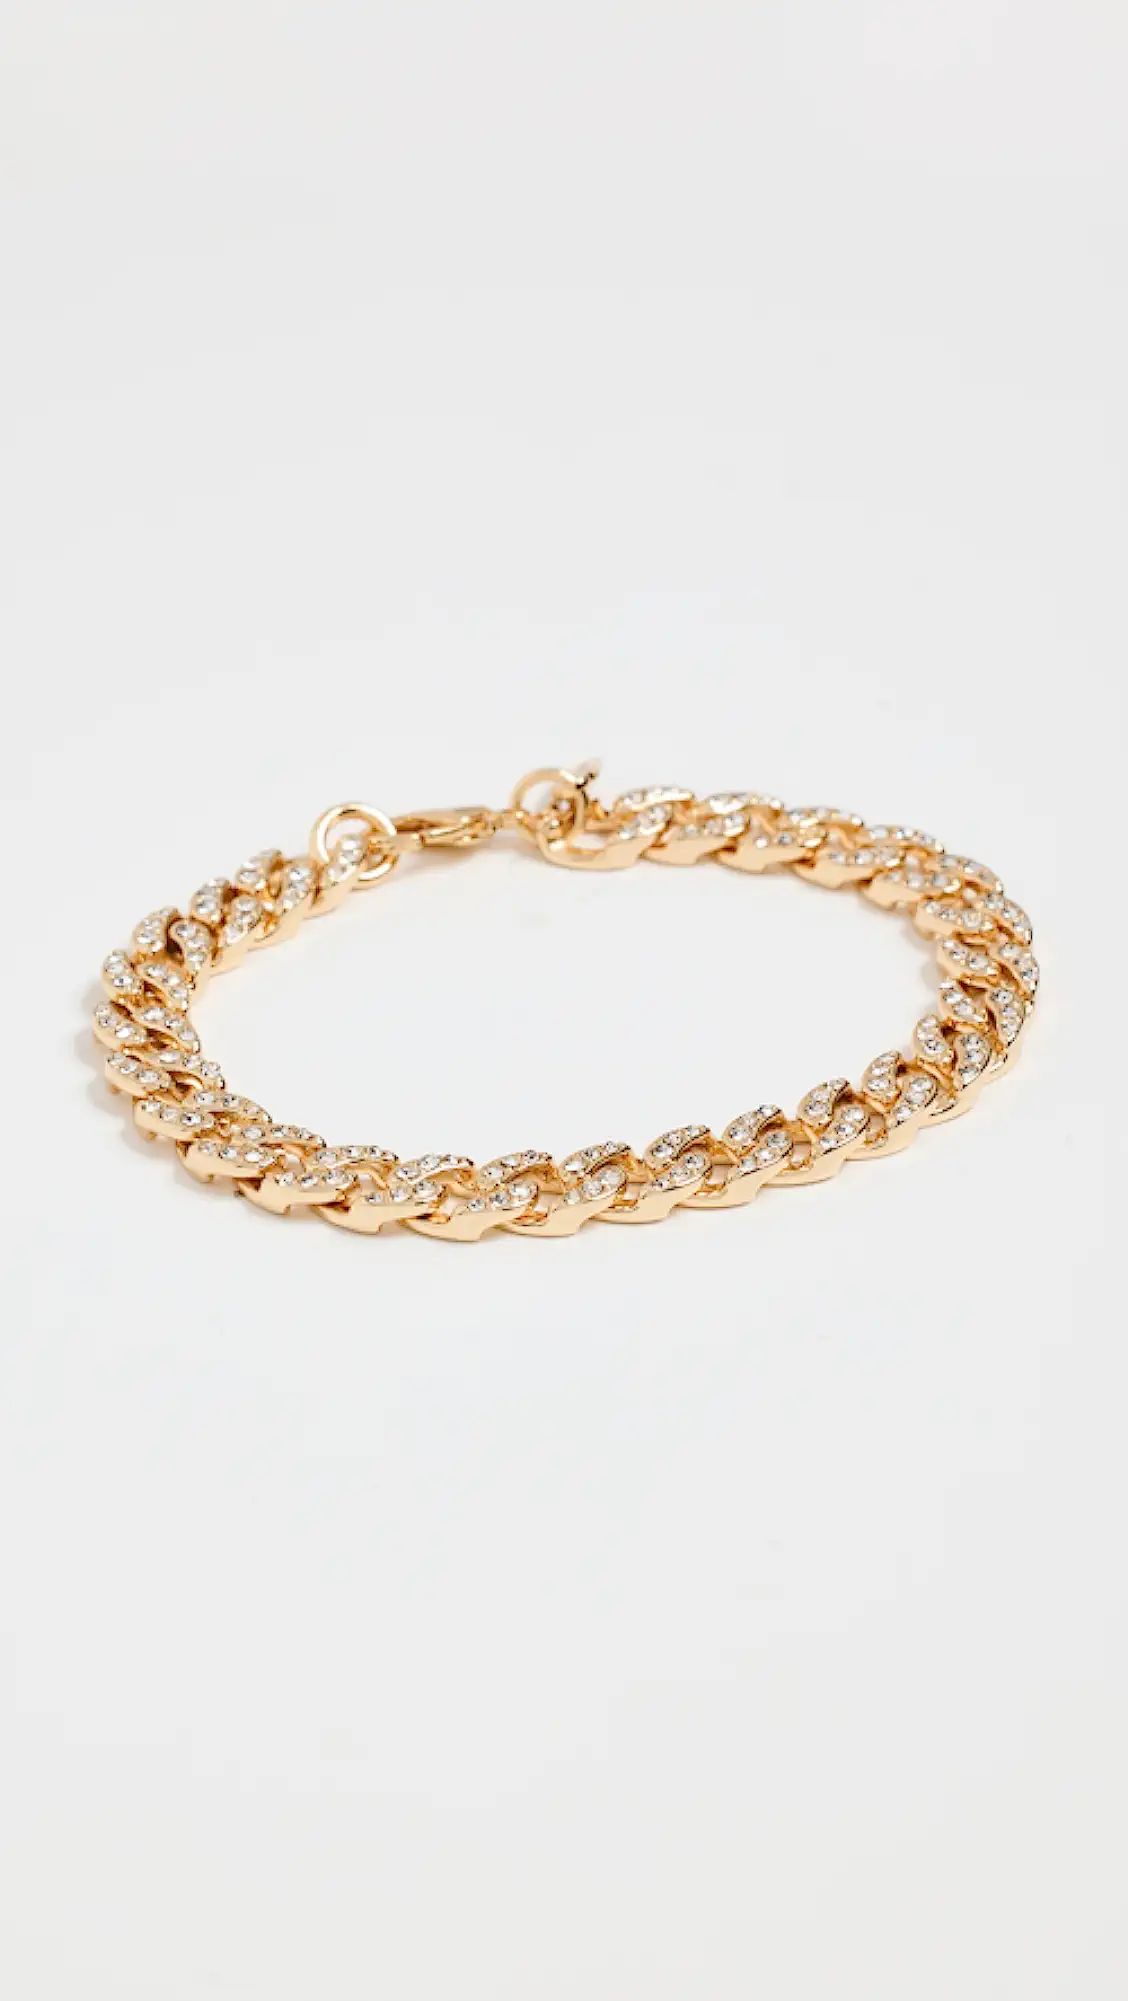 Wide Gold/Crystal Curb Link Chain Bracelet | Shopbop